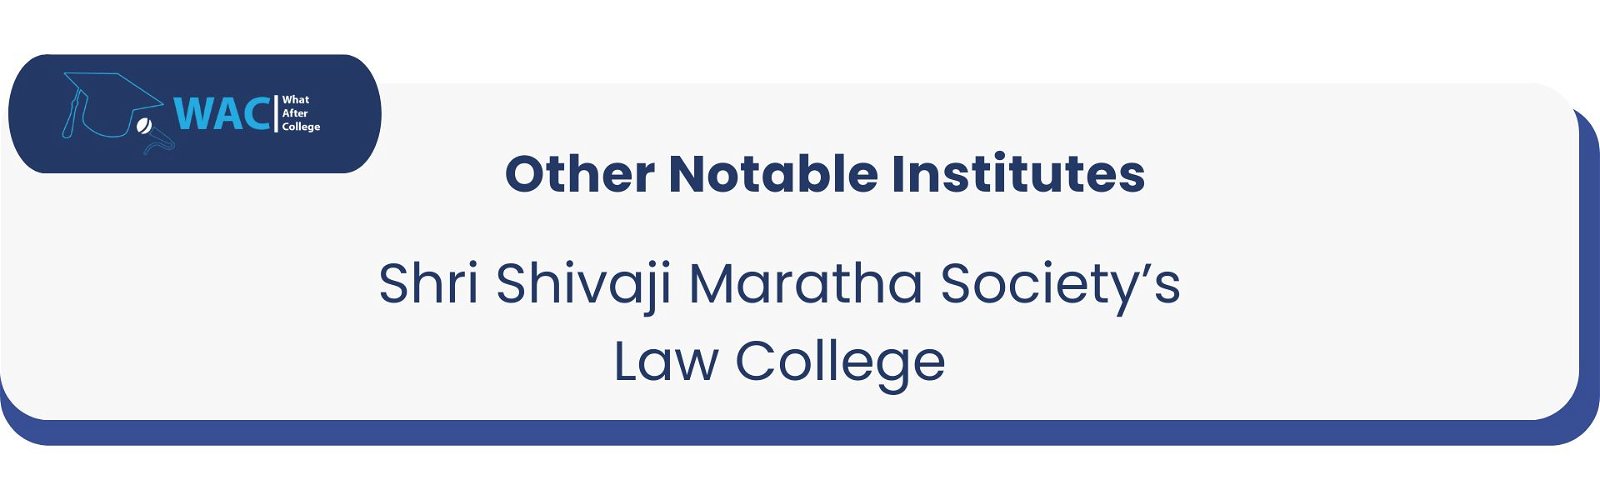 Shri Shivaji Maratha Society's Law College